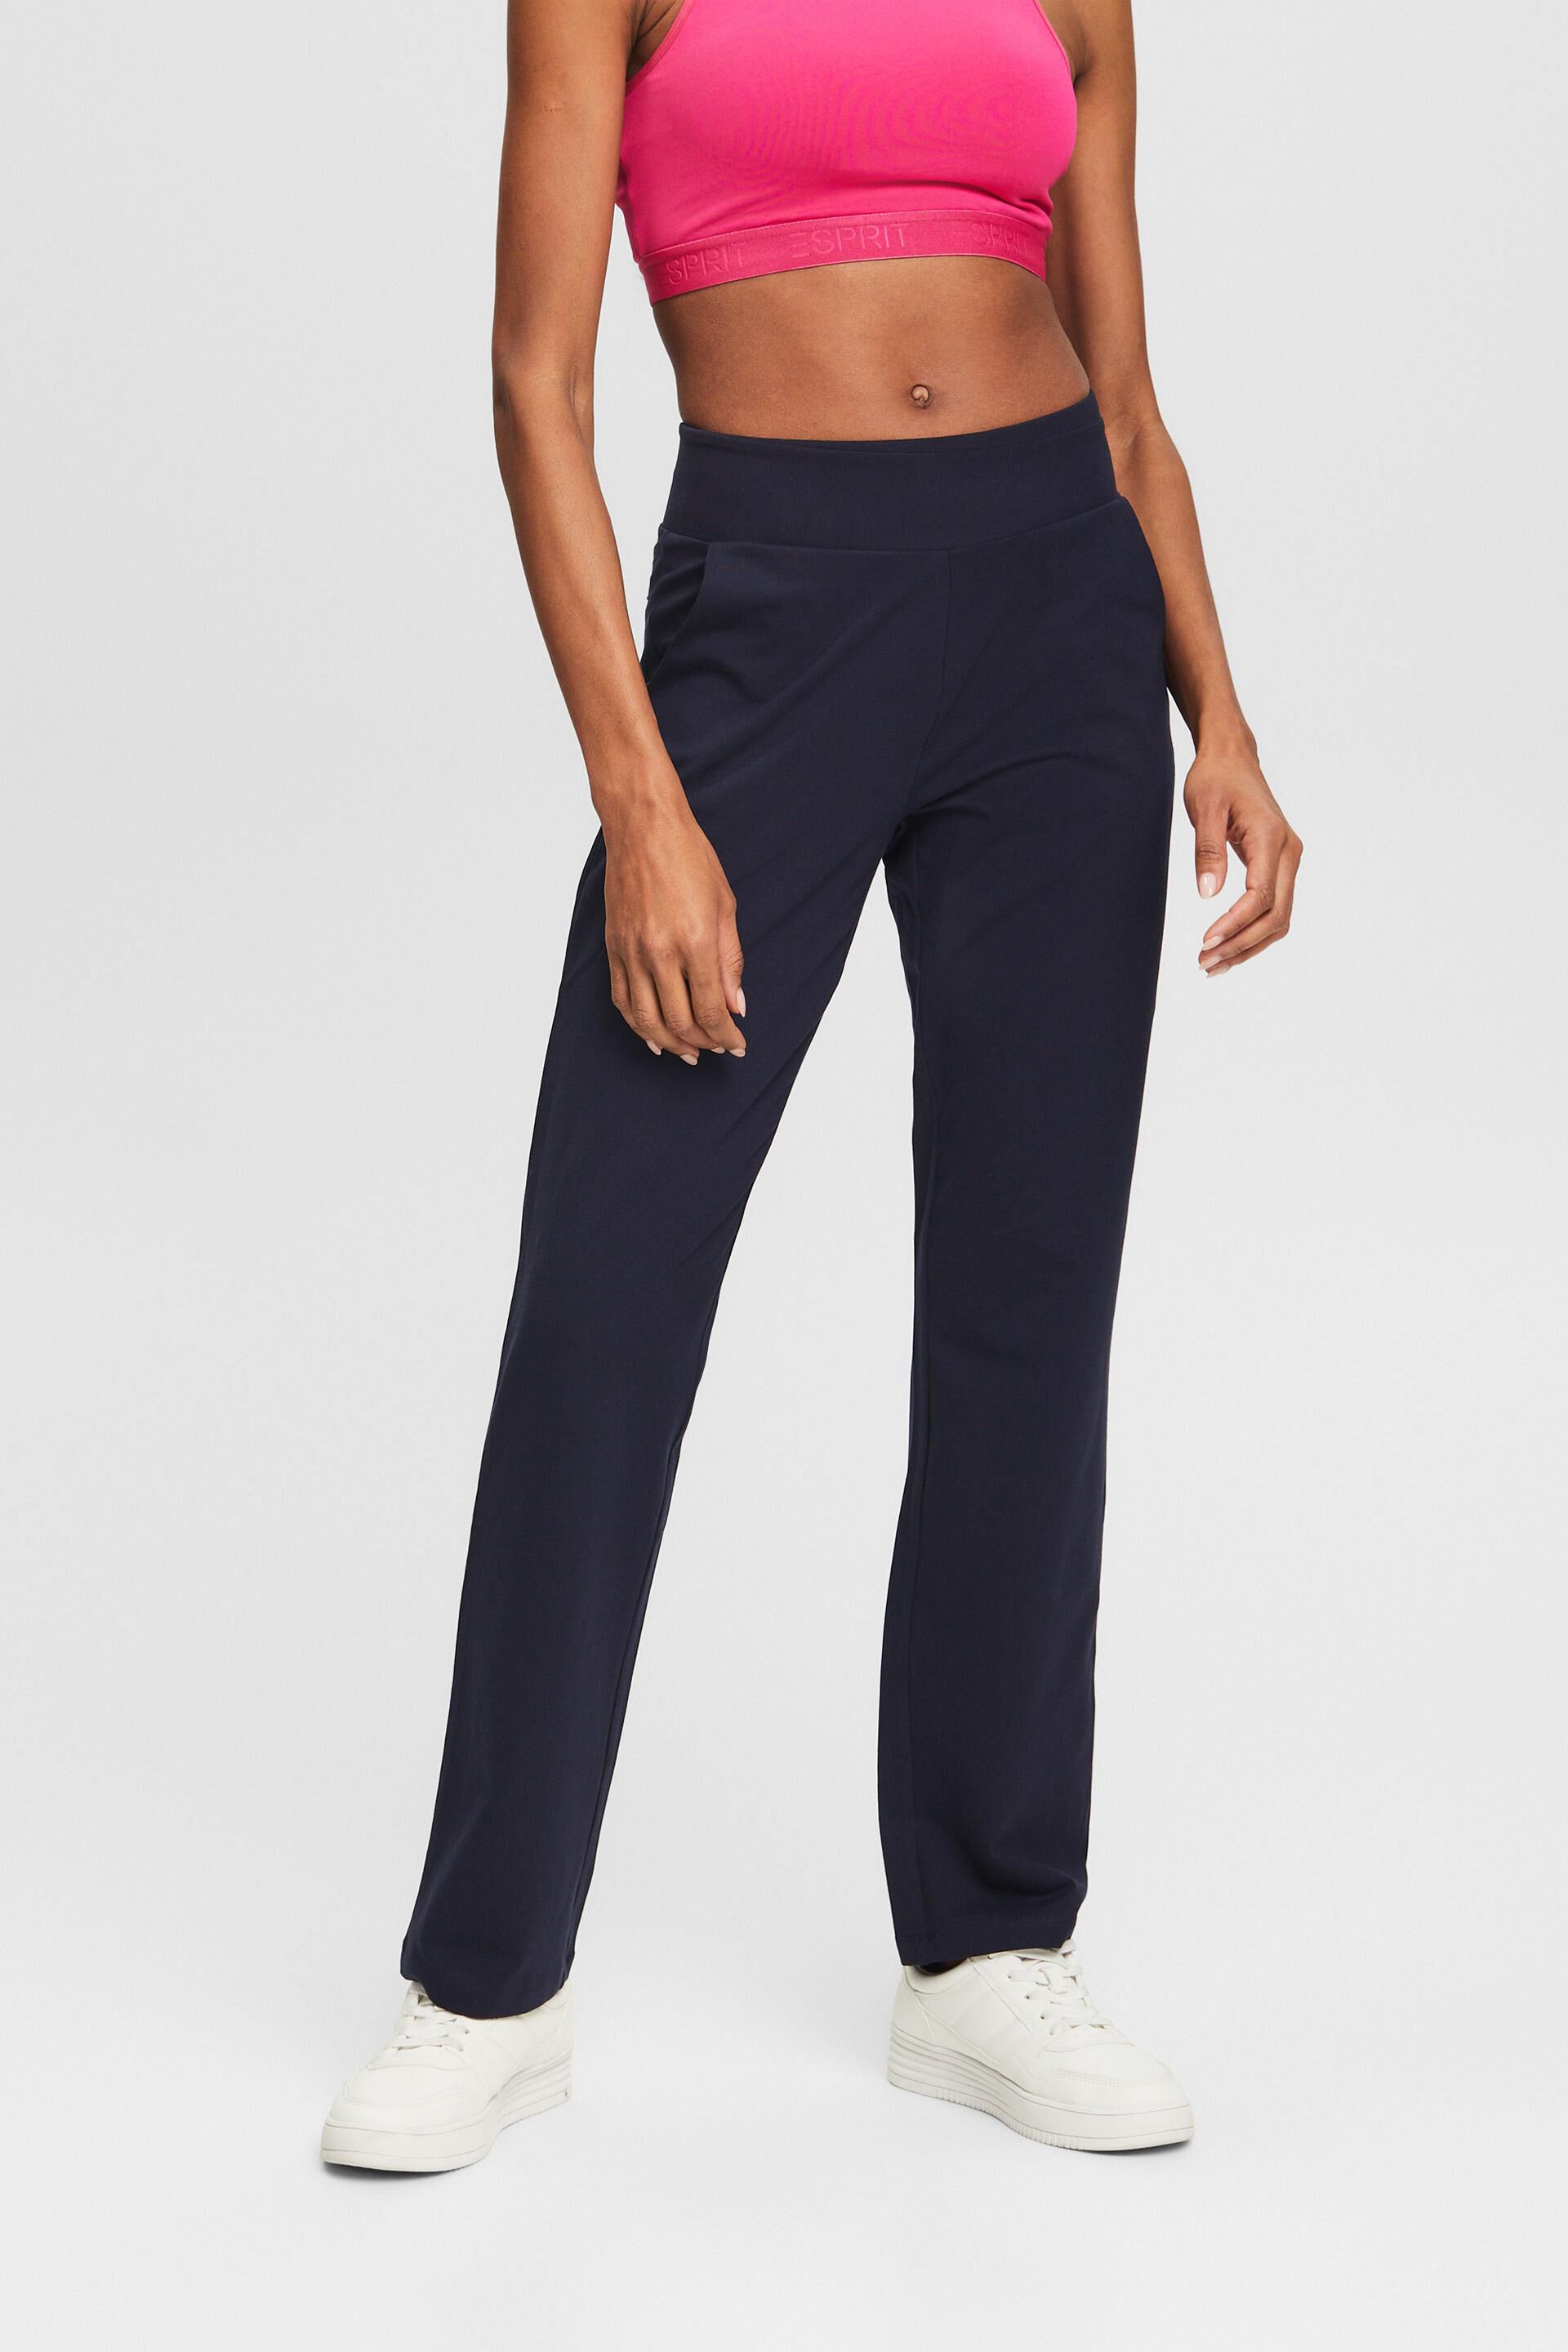 Buy Brazil Jersey Pants | Auroville Online Store